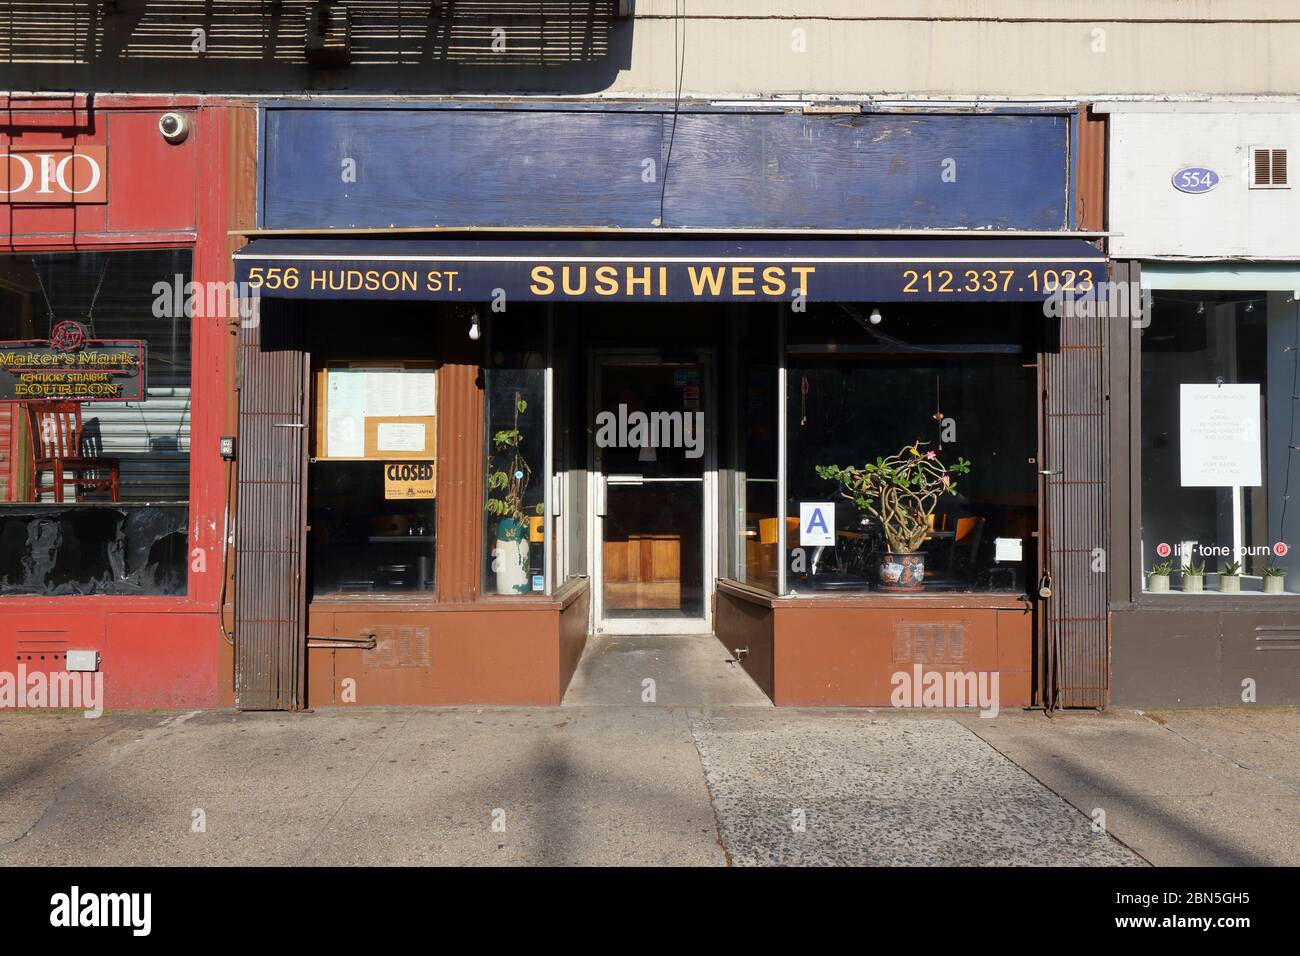 [historical storefront] Sushi West, 556 Hudson Street, New York, NYC storefront photo of a Japanese sushi restaurant in Manhattan's West Village. Stock Photo